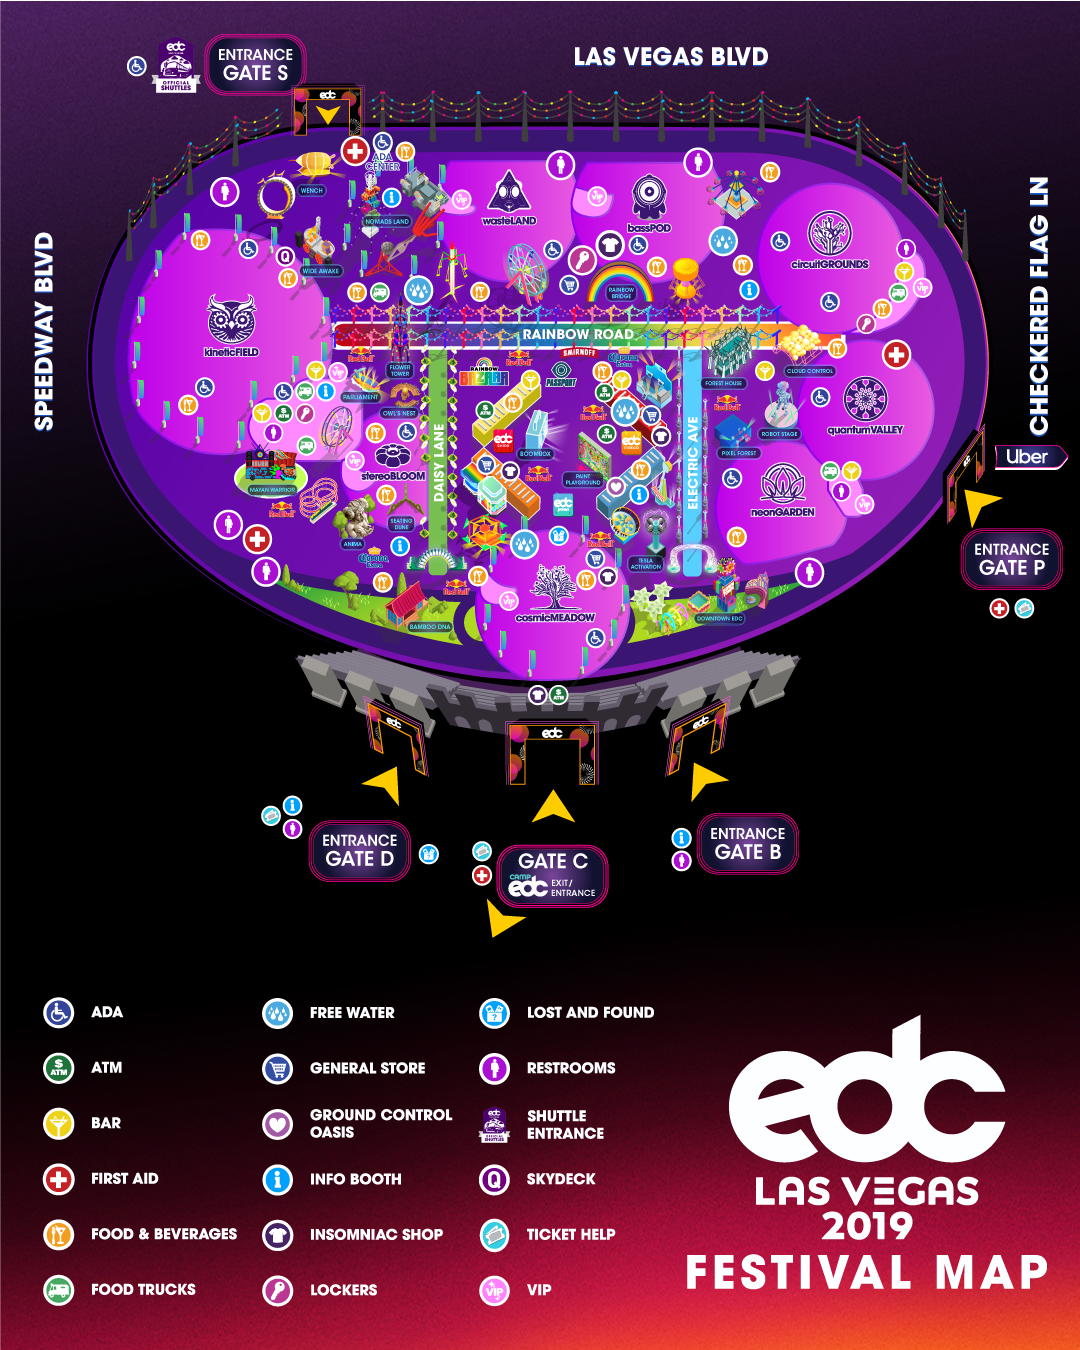 EDC Las Vegas 2019 Set Times & Festival Maps Are Here